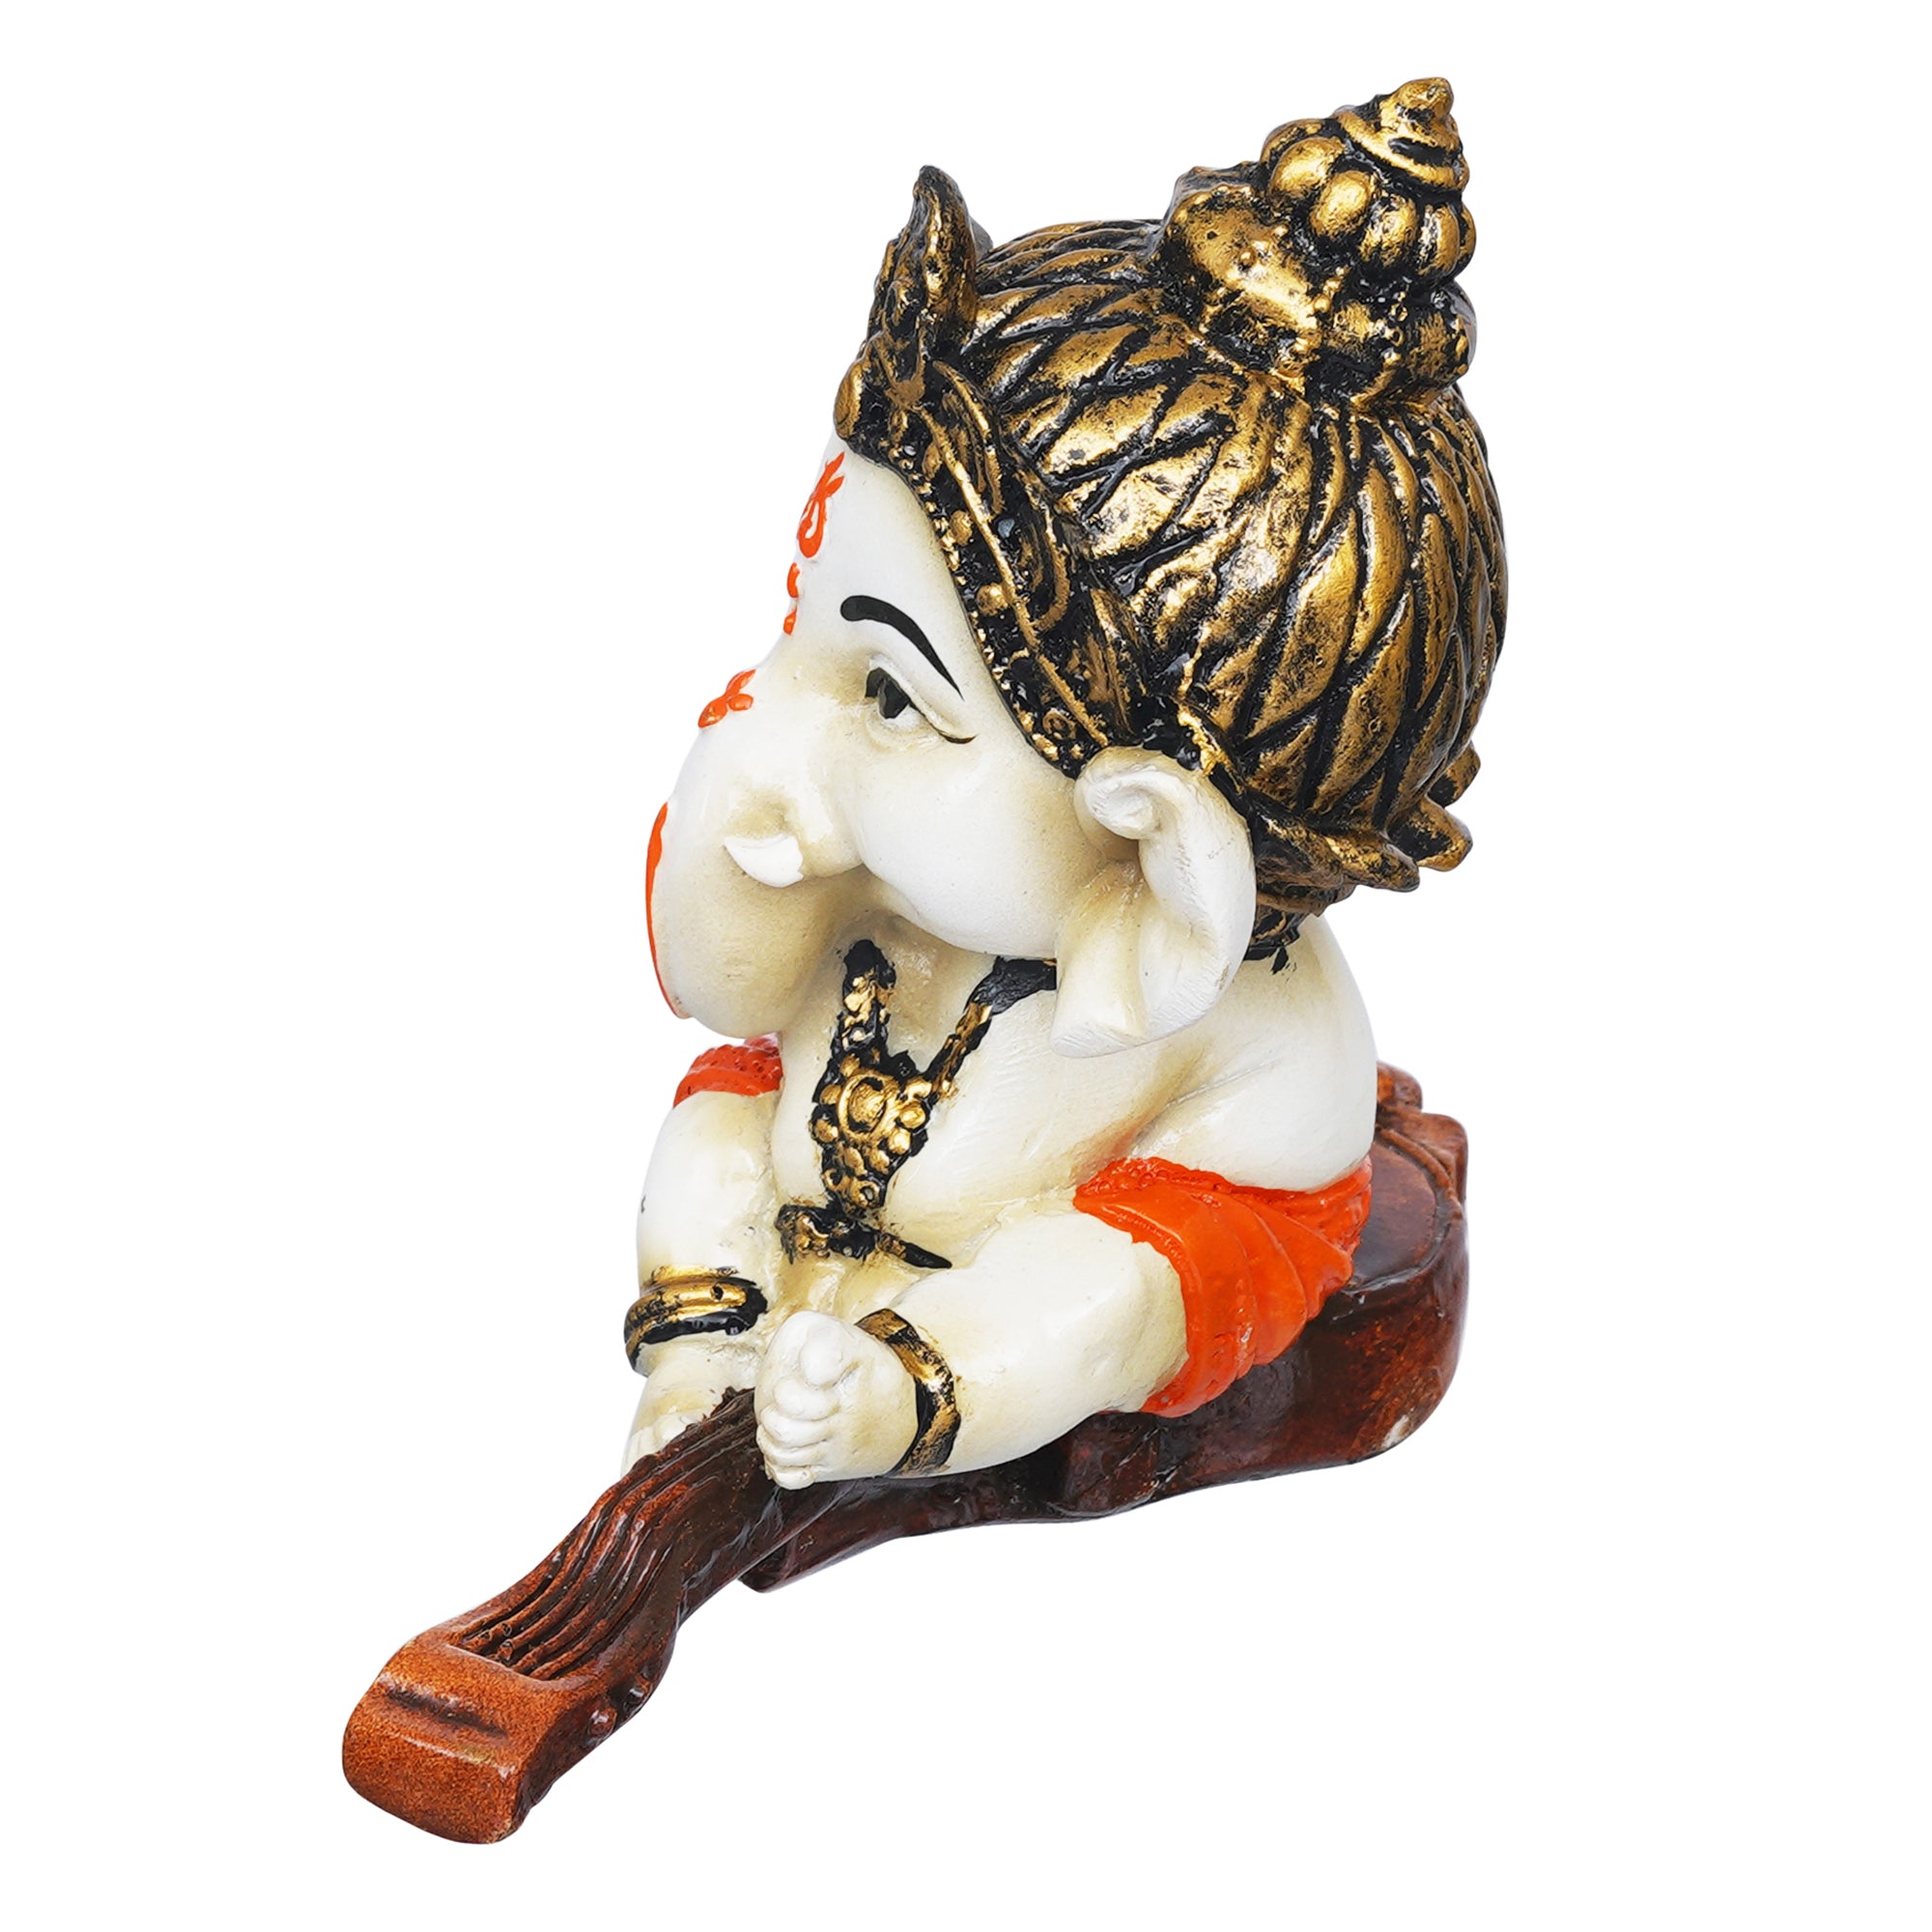 eCraftIndia Orange Polyresin Decorated Lord Ganesha Idol Sitting on Veena Musical Instrument 7